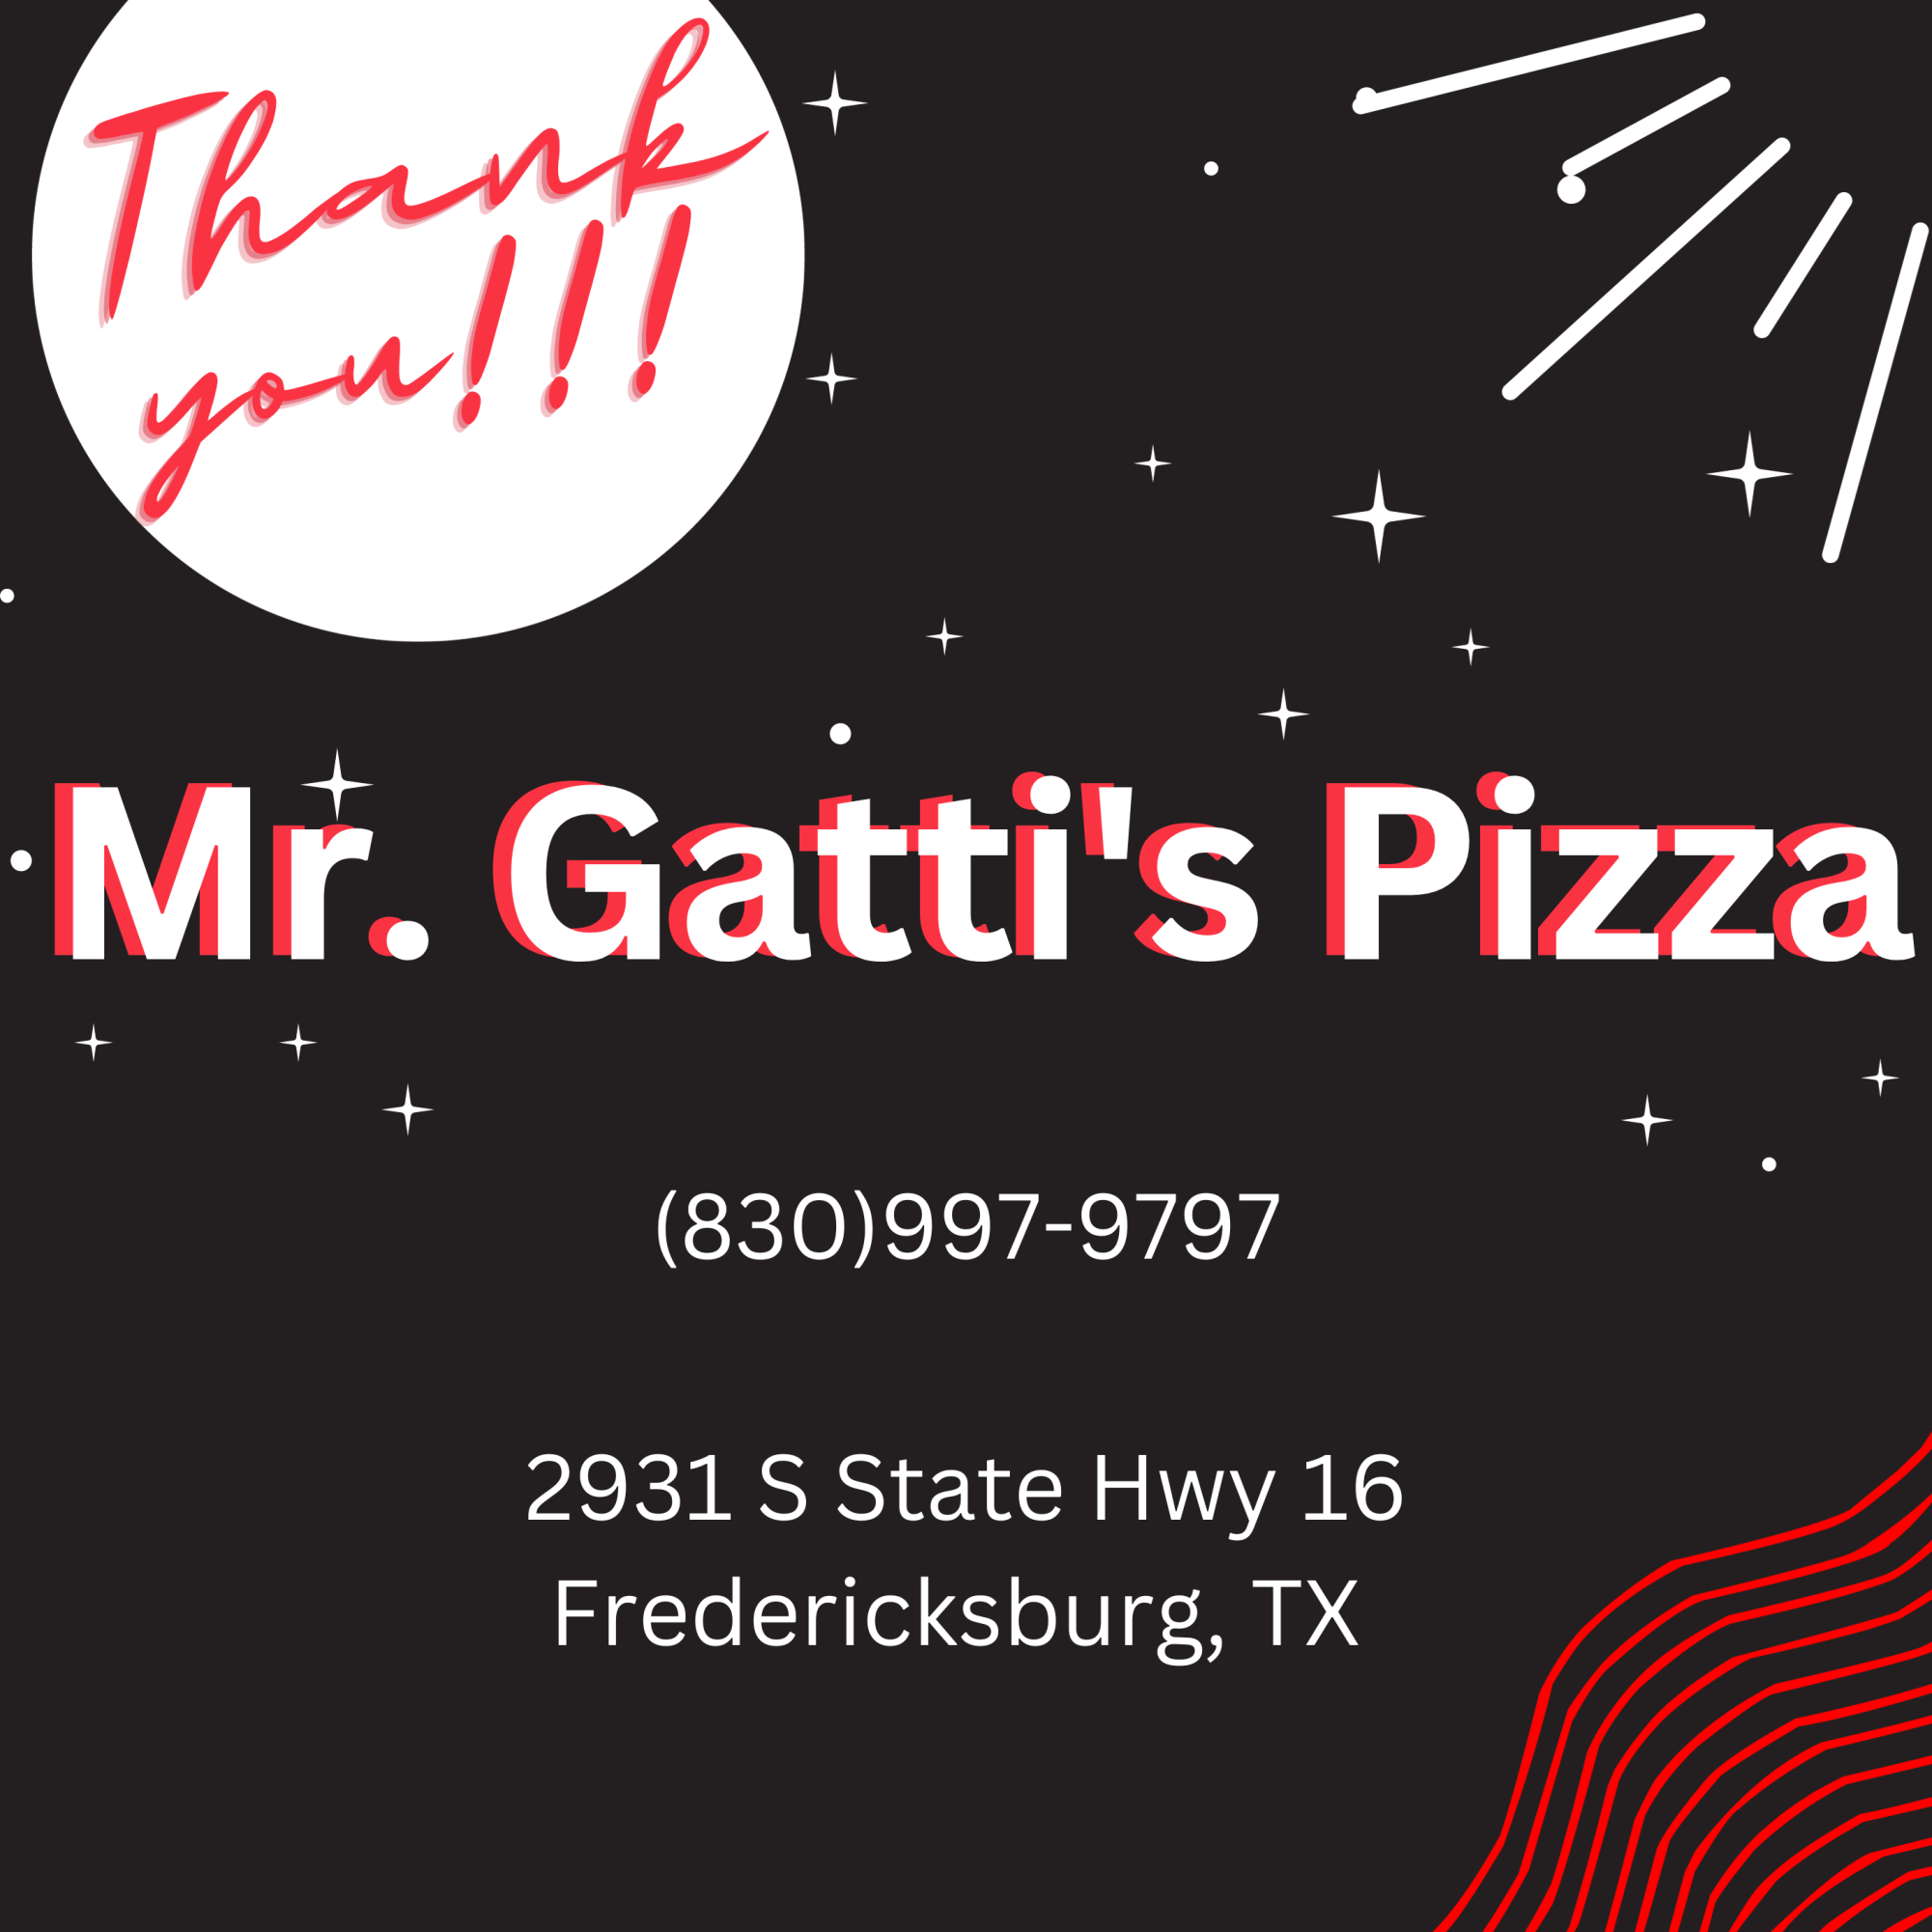 Mr. Gattis Pizza